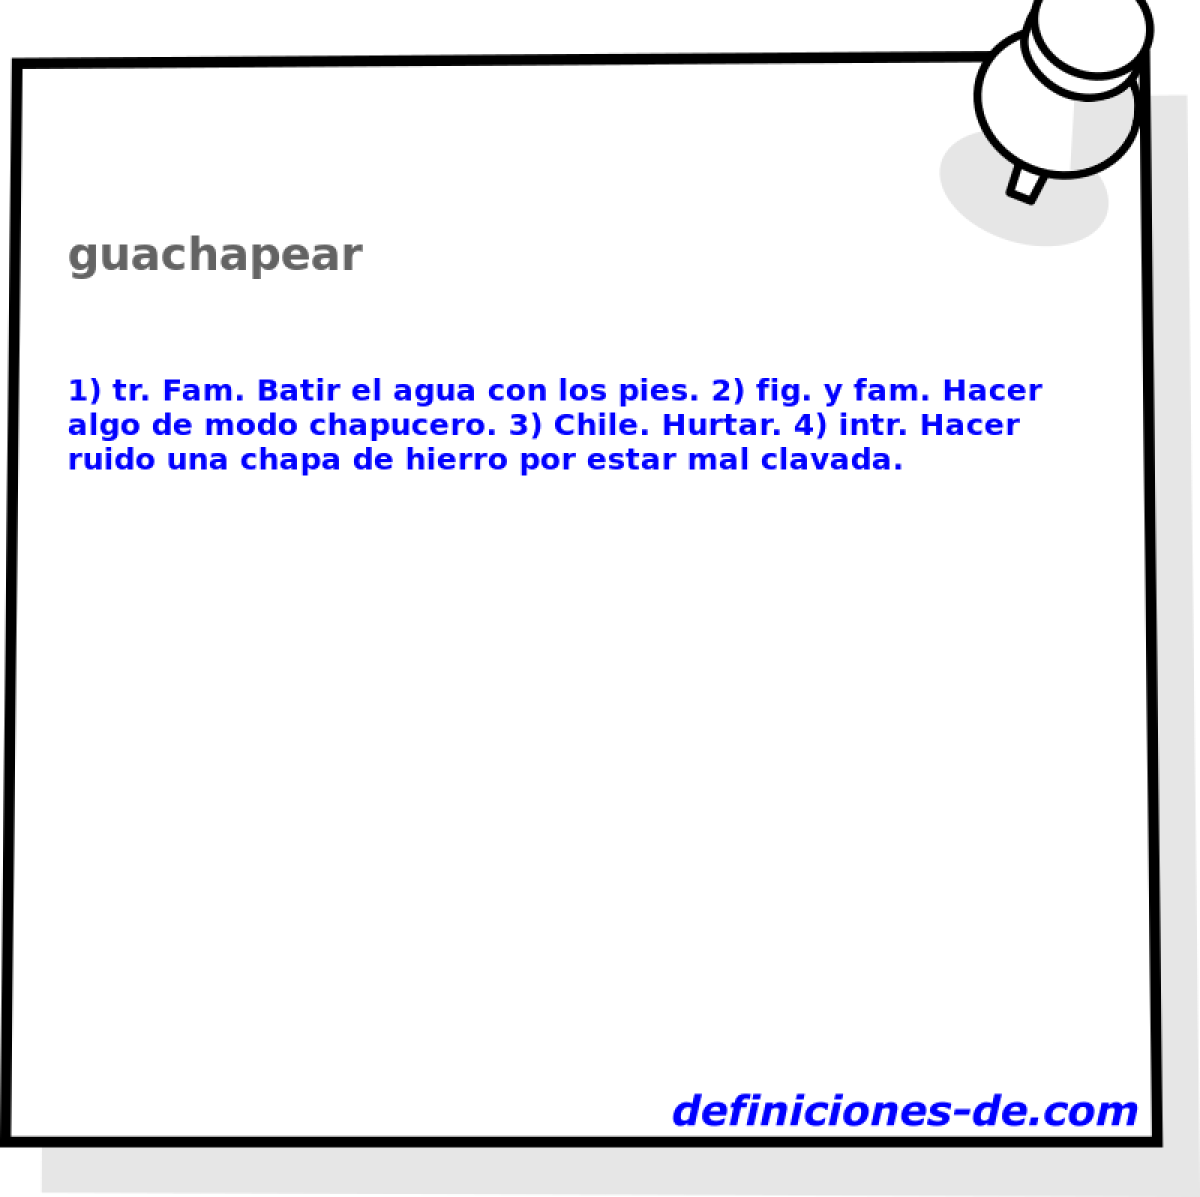 guachapear 